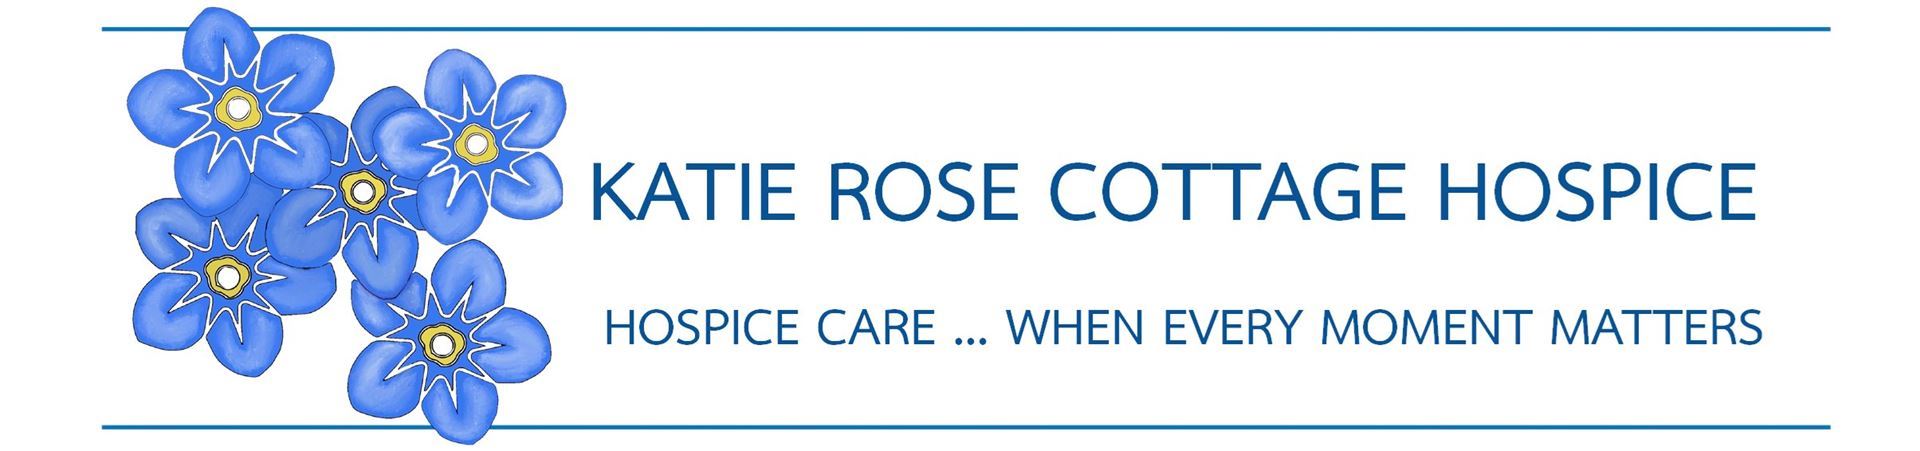 Katie Rose Cottage Hospice logo